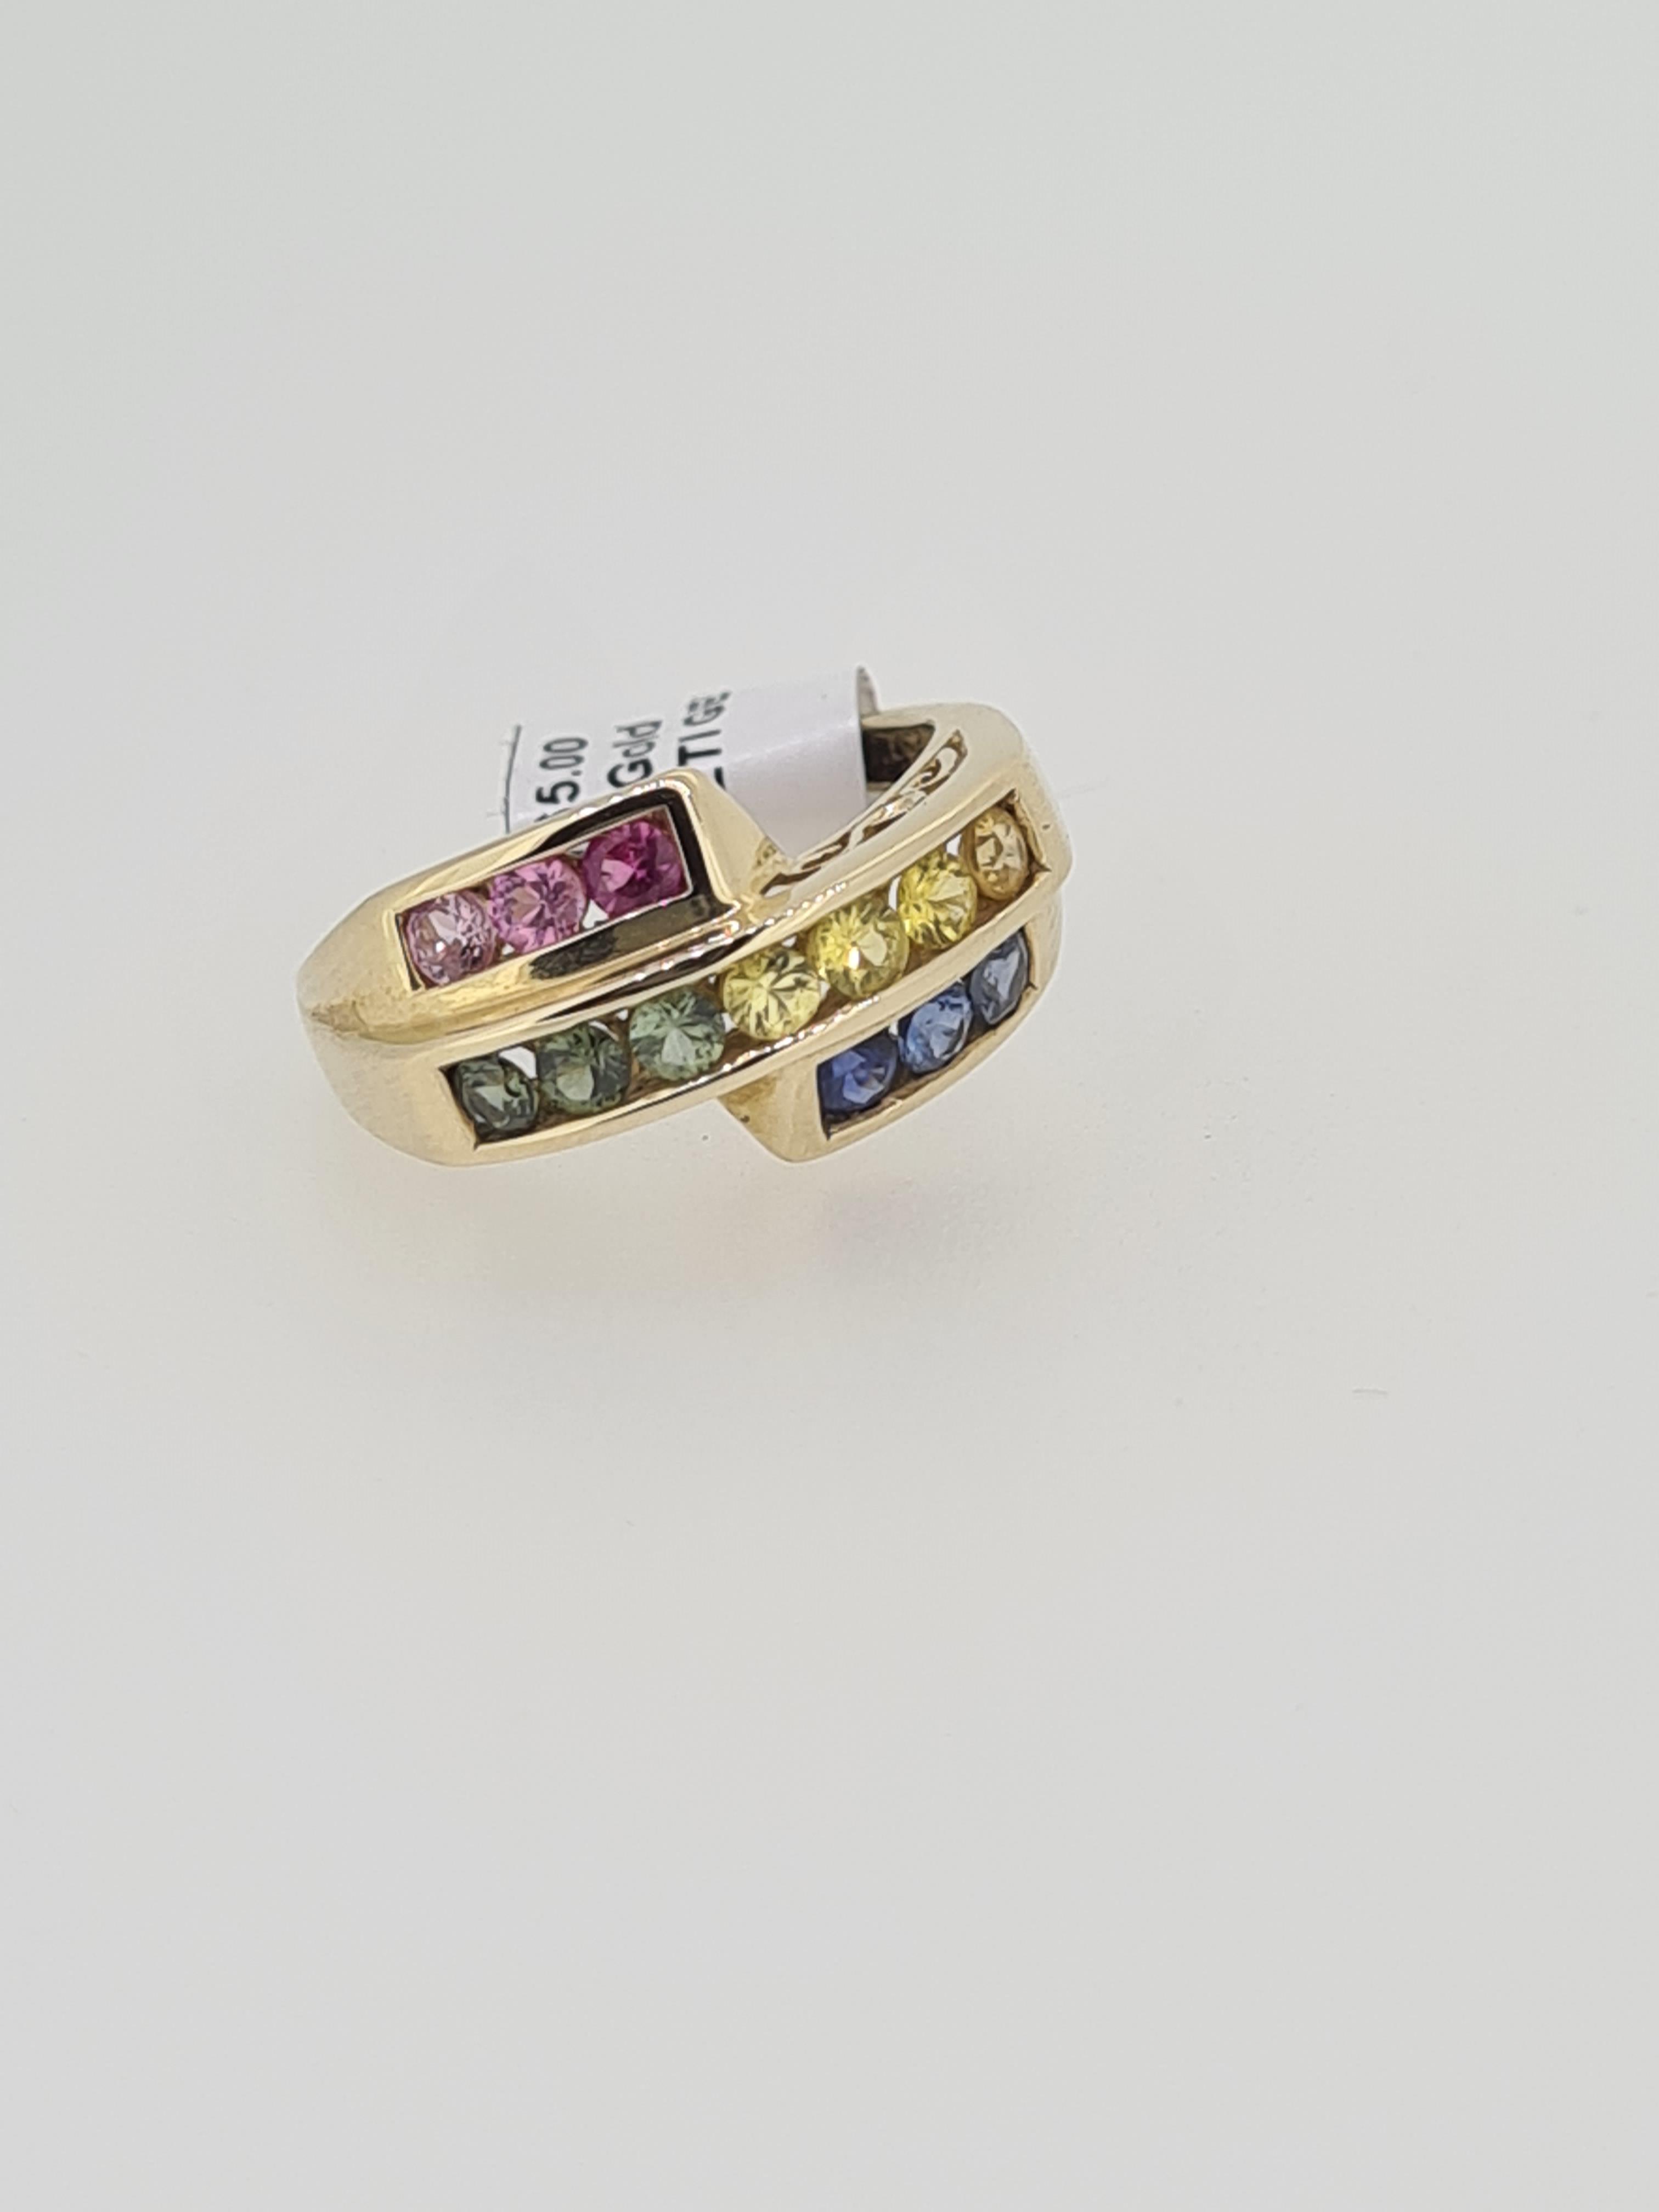 9ct hallmark rainbow sapphires set ring - Image 4 of 4